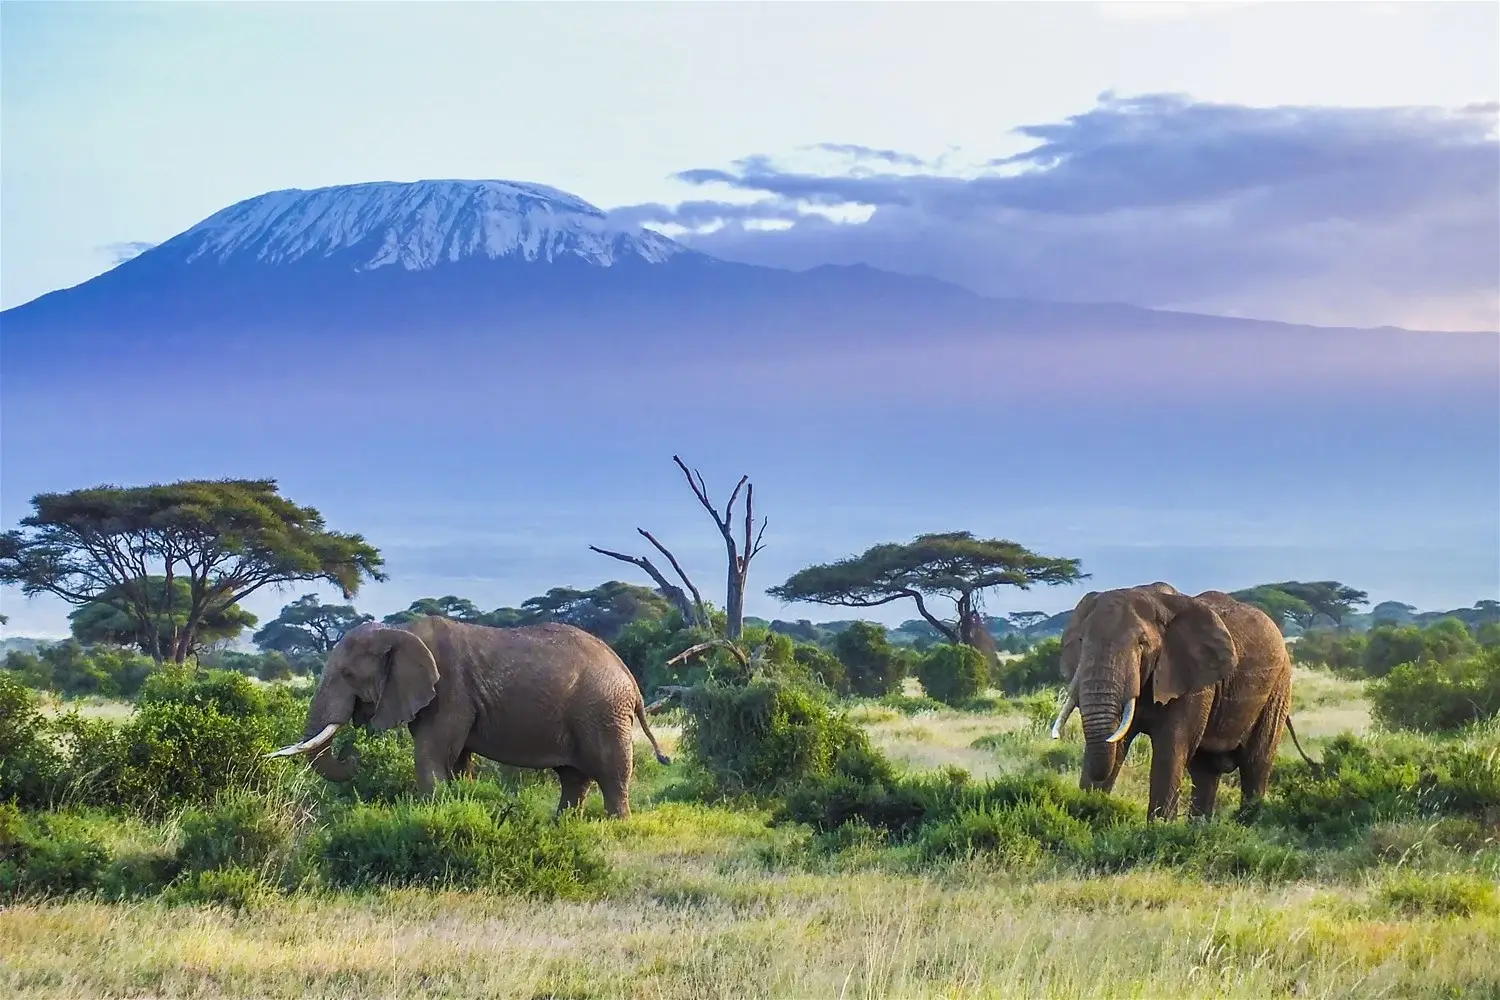 Kenya holiday packages to Amboseli National Park - Two elephants in Amboseli National Park